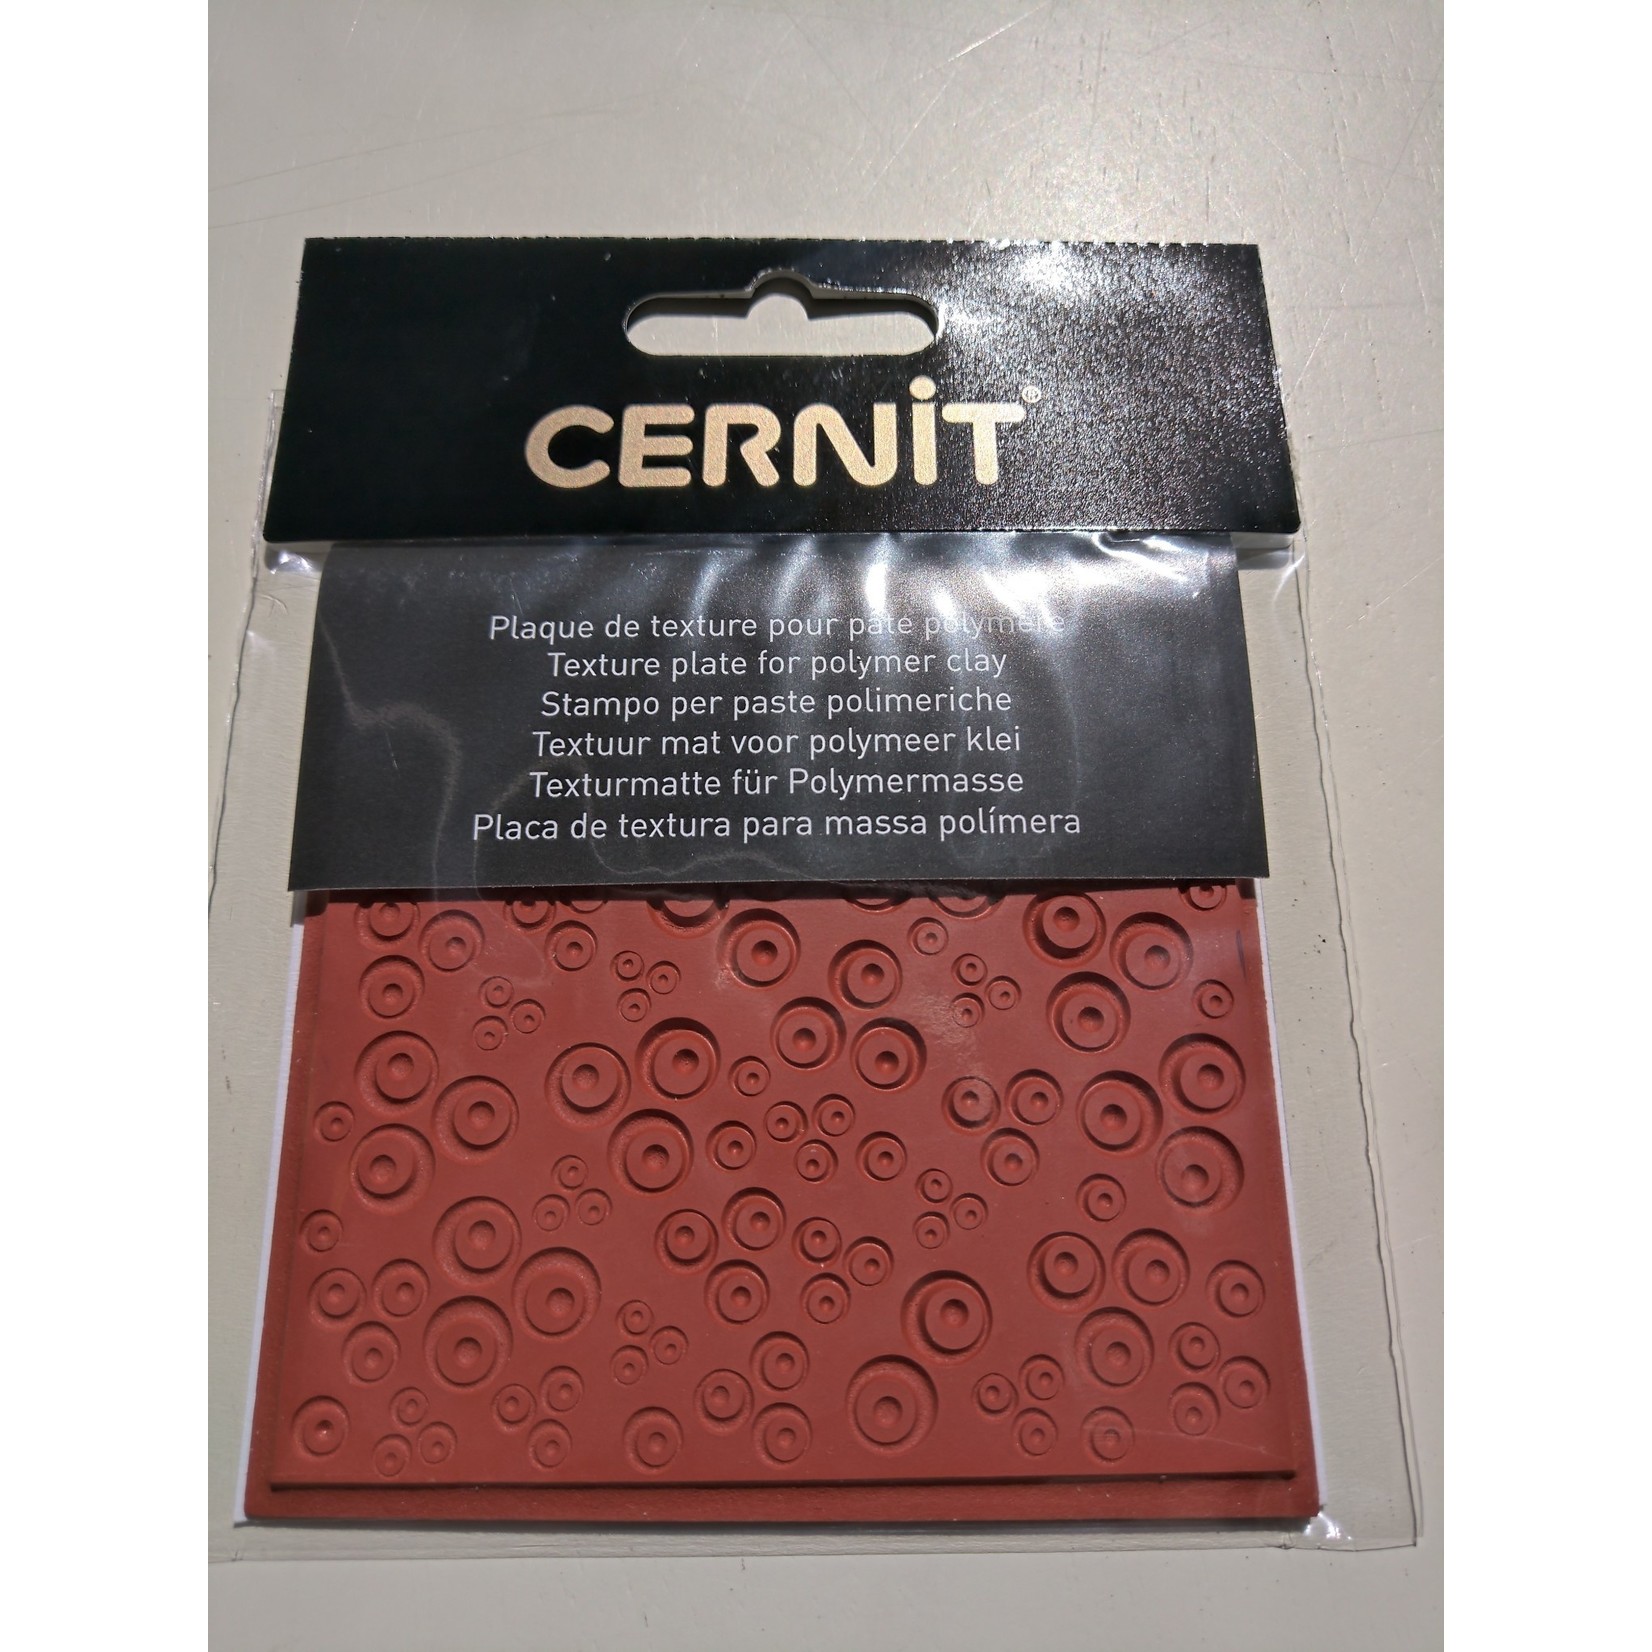 Cernit Cernit Texture Plate 9 X 9 cm - Contemporary Clovers (Red Version)